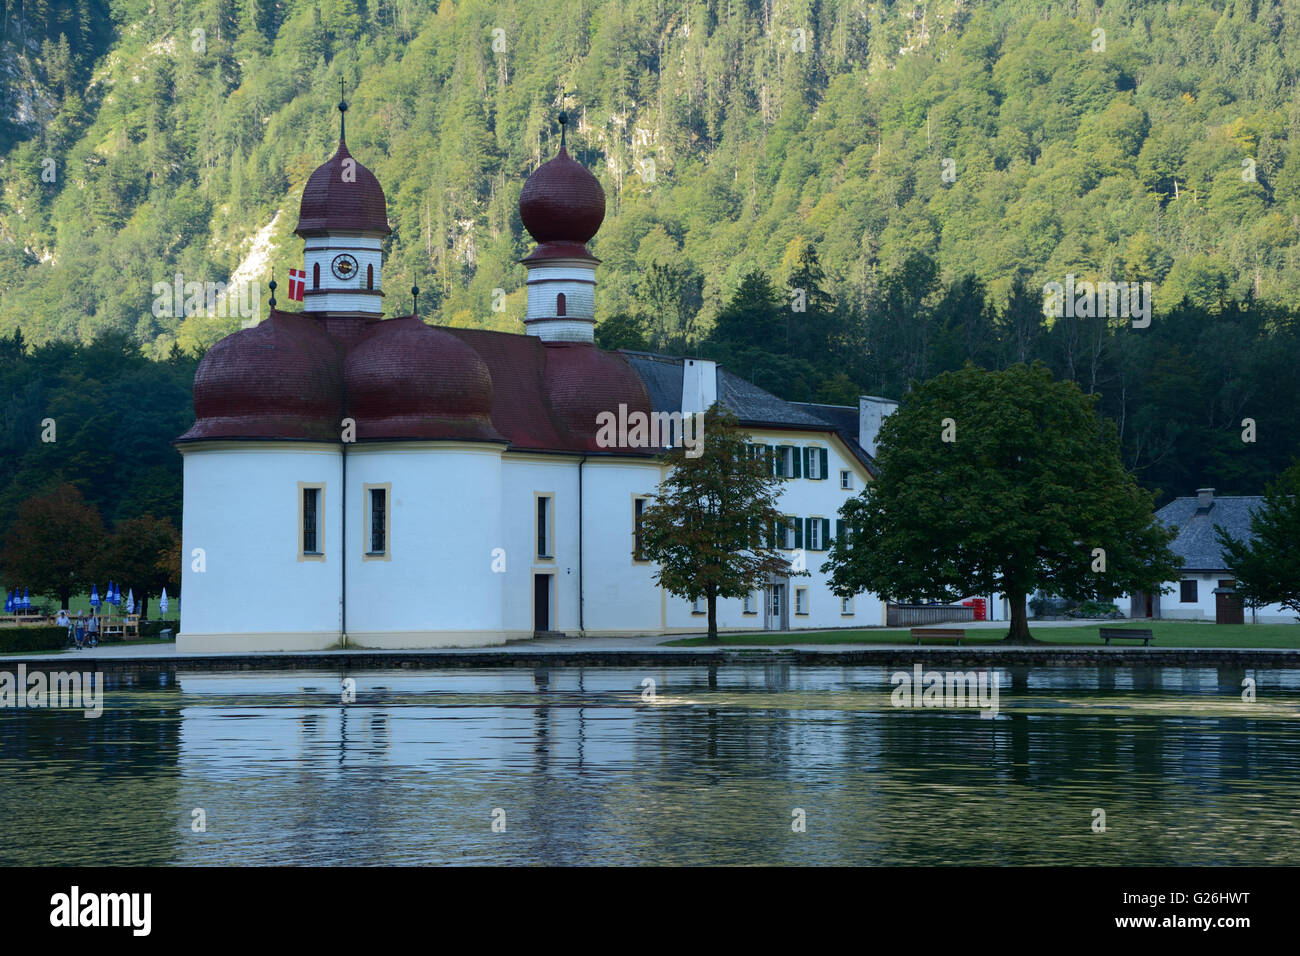 Schonau am Konigssee, Germany - August 30, 2015: Early morning at St. Bartholoma church at Koenigssee lake nearby Schonau am Kon Stock Photo